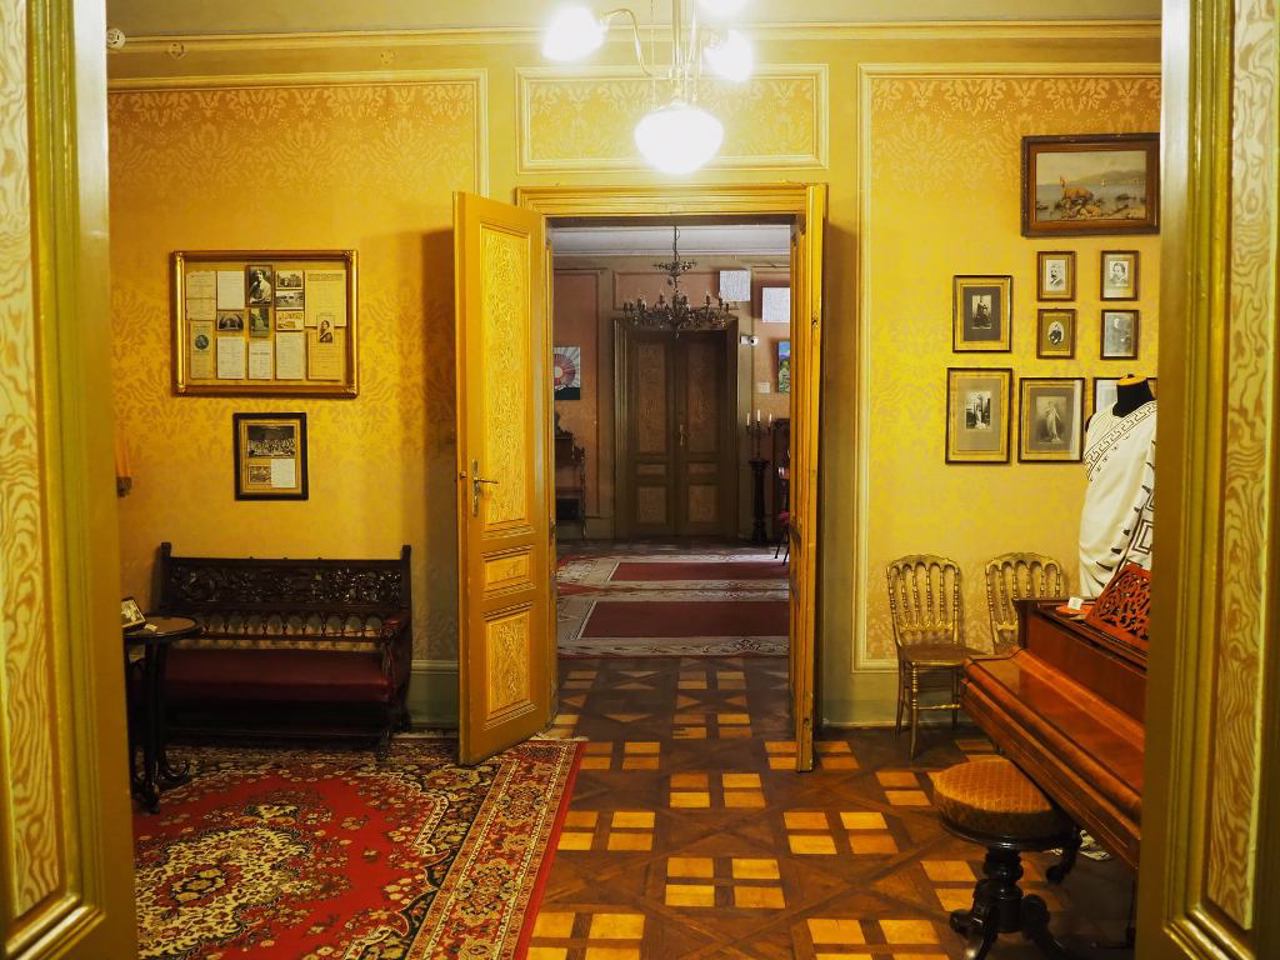 Krushelnytska Museum, Lviv